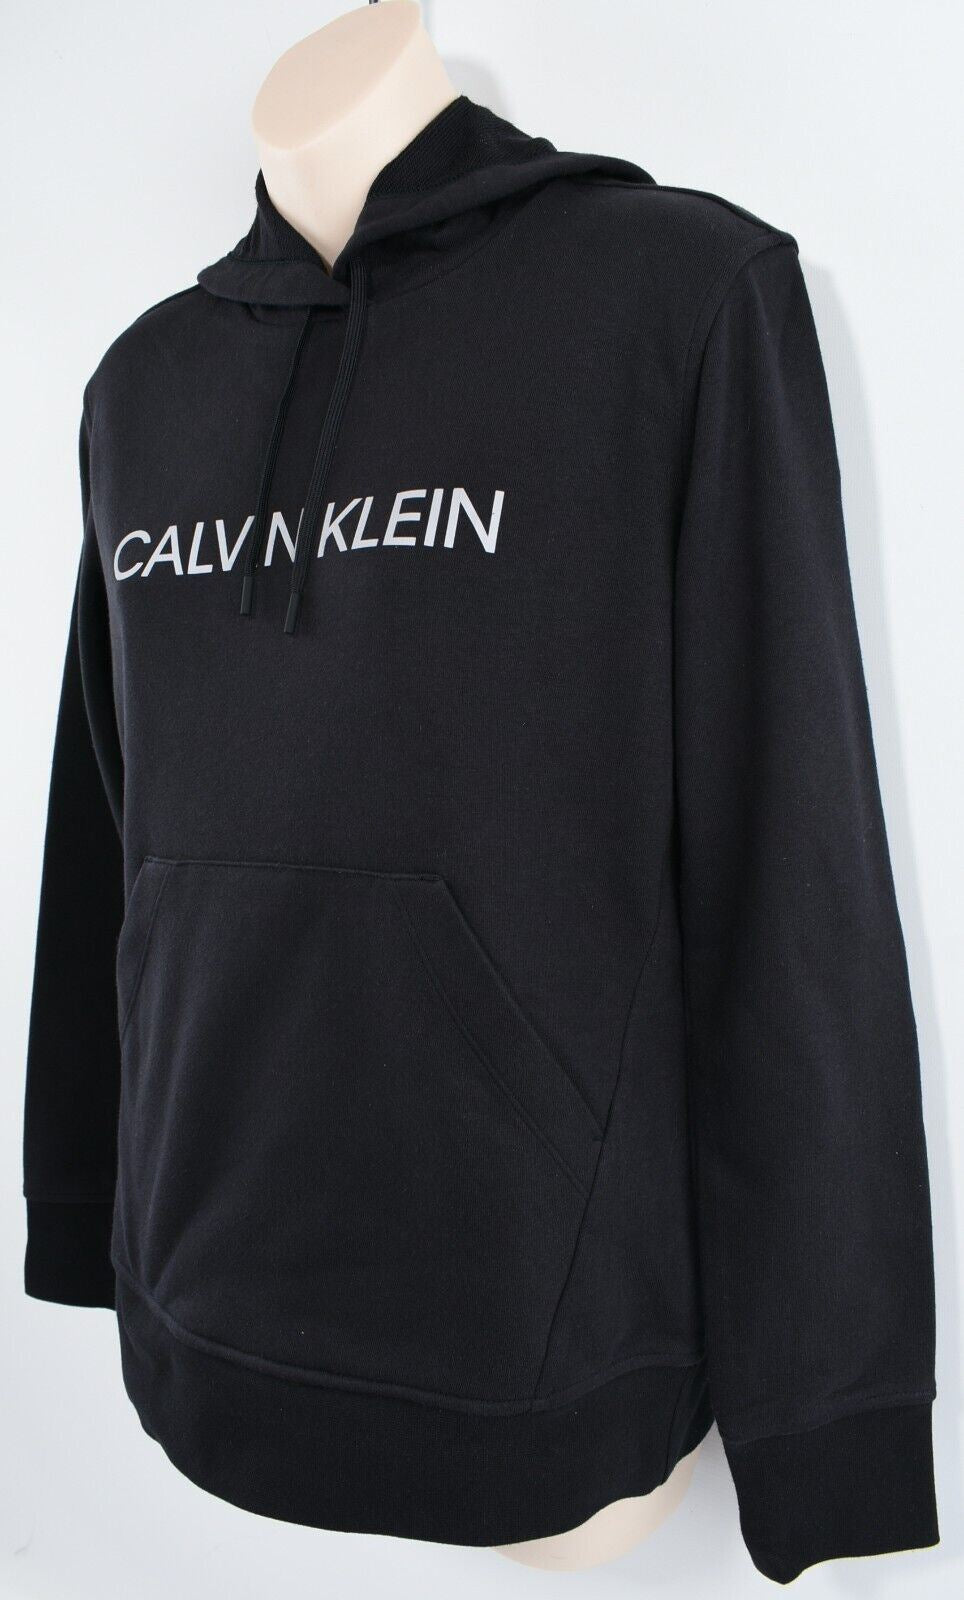 CALVIN KLEIN Performance Women's Hoodie, Hooded Sweatshirt, Black size S (UK 10)